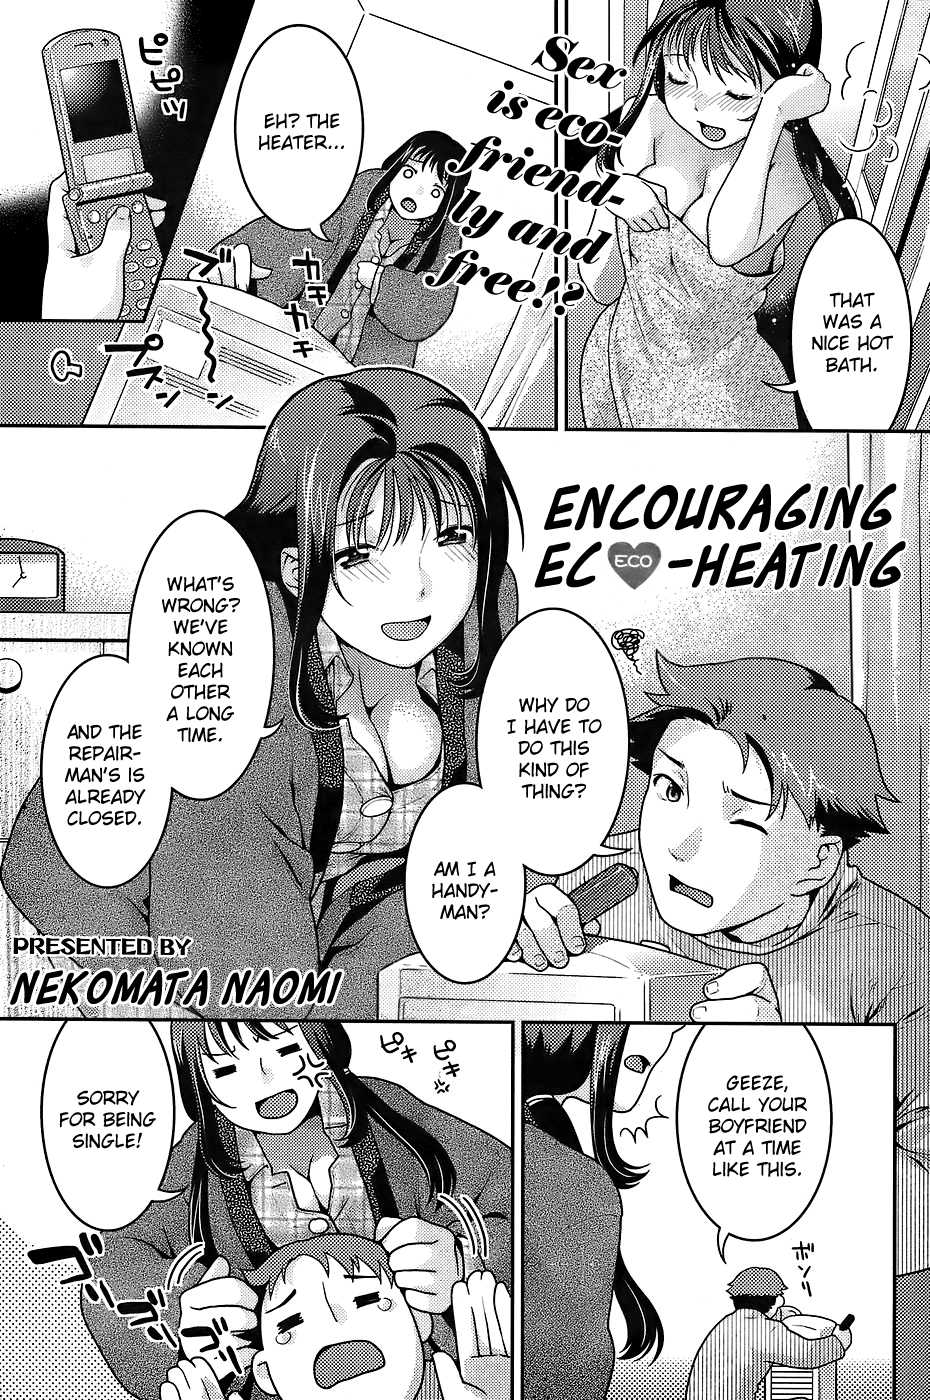 [Nekomata Naomi] Encouraging Eco-heating [ENG] 